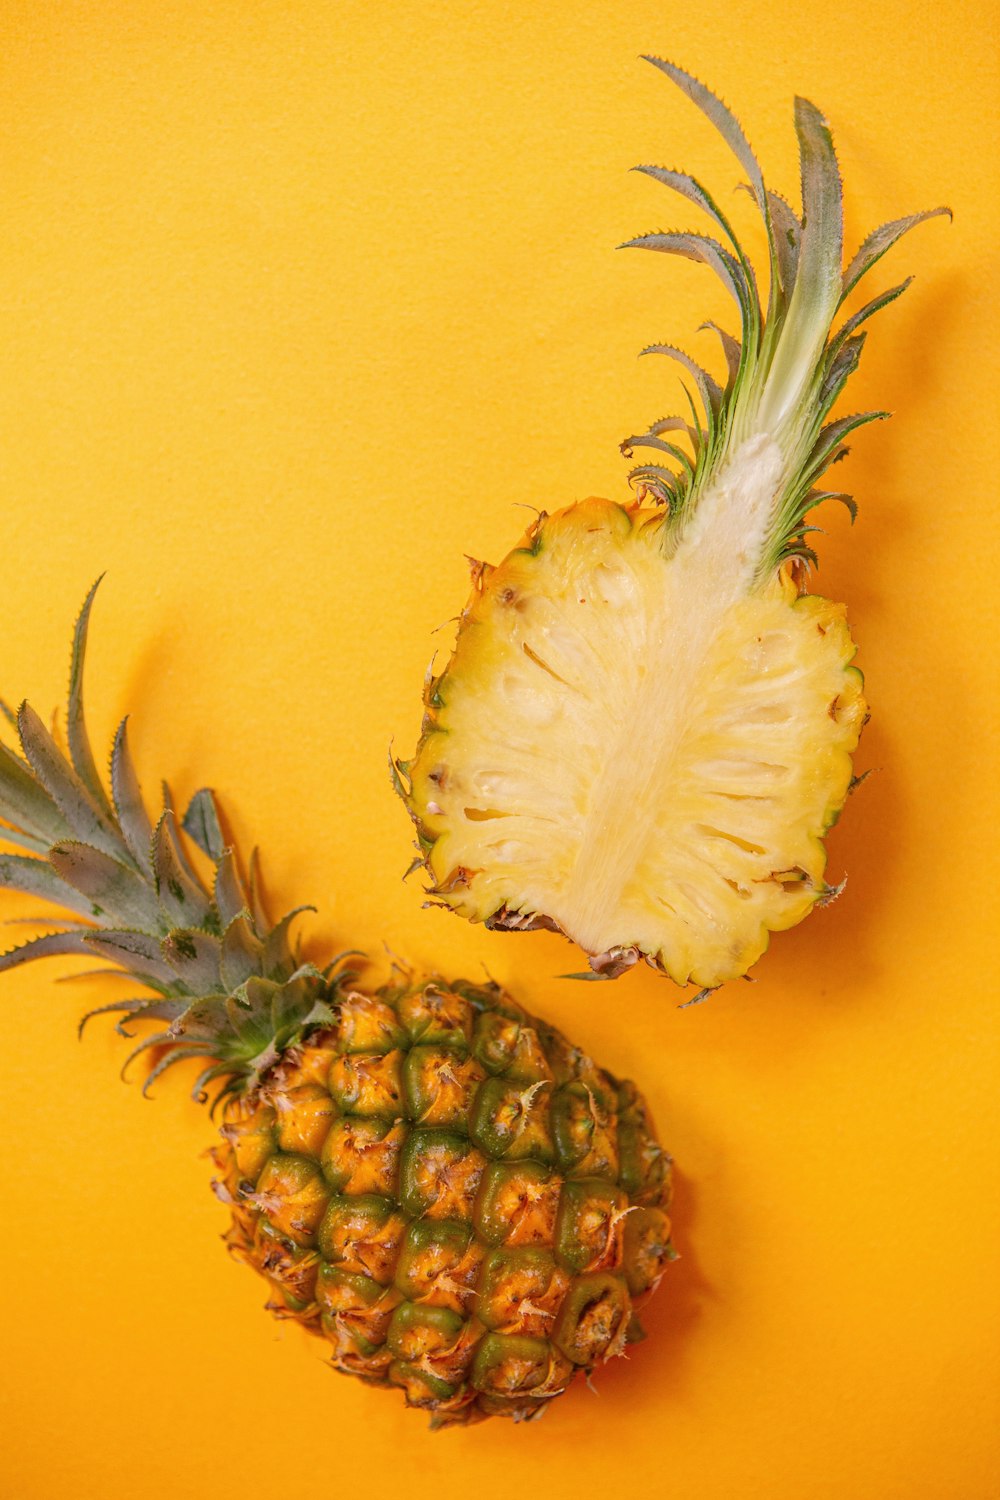 pineapple fruit on yellow surface